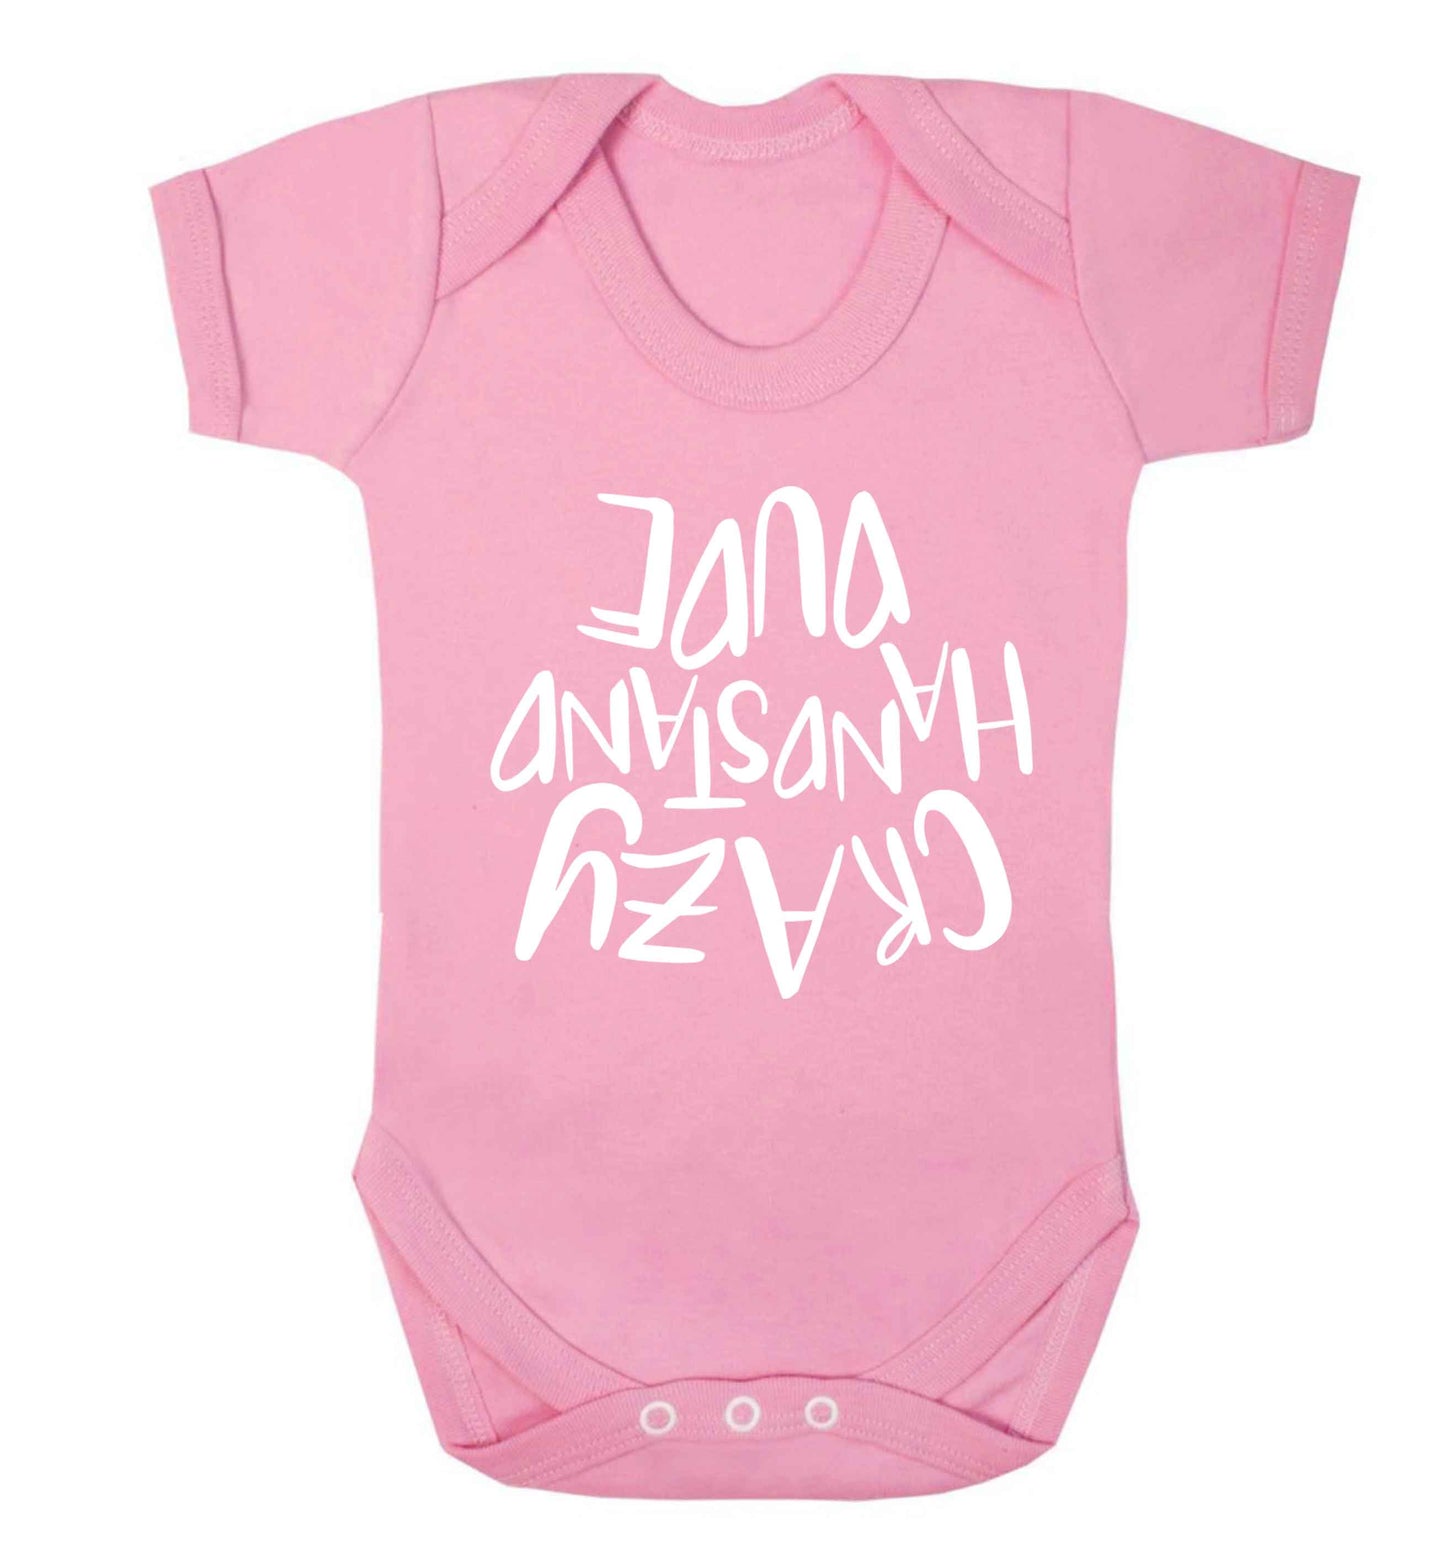 Crazy handstand dude Baby Vest pale pink 18-24 months